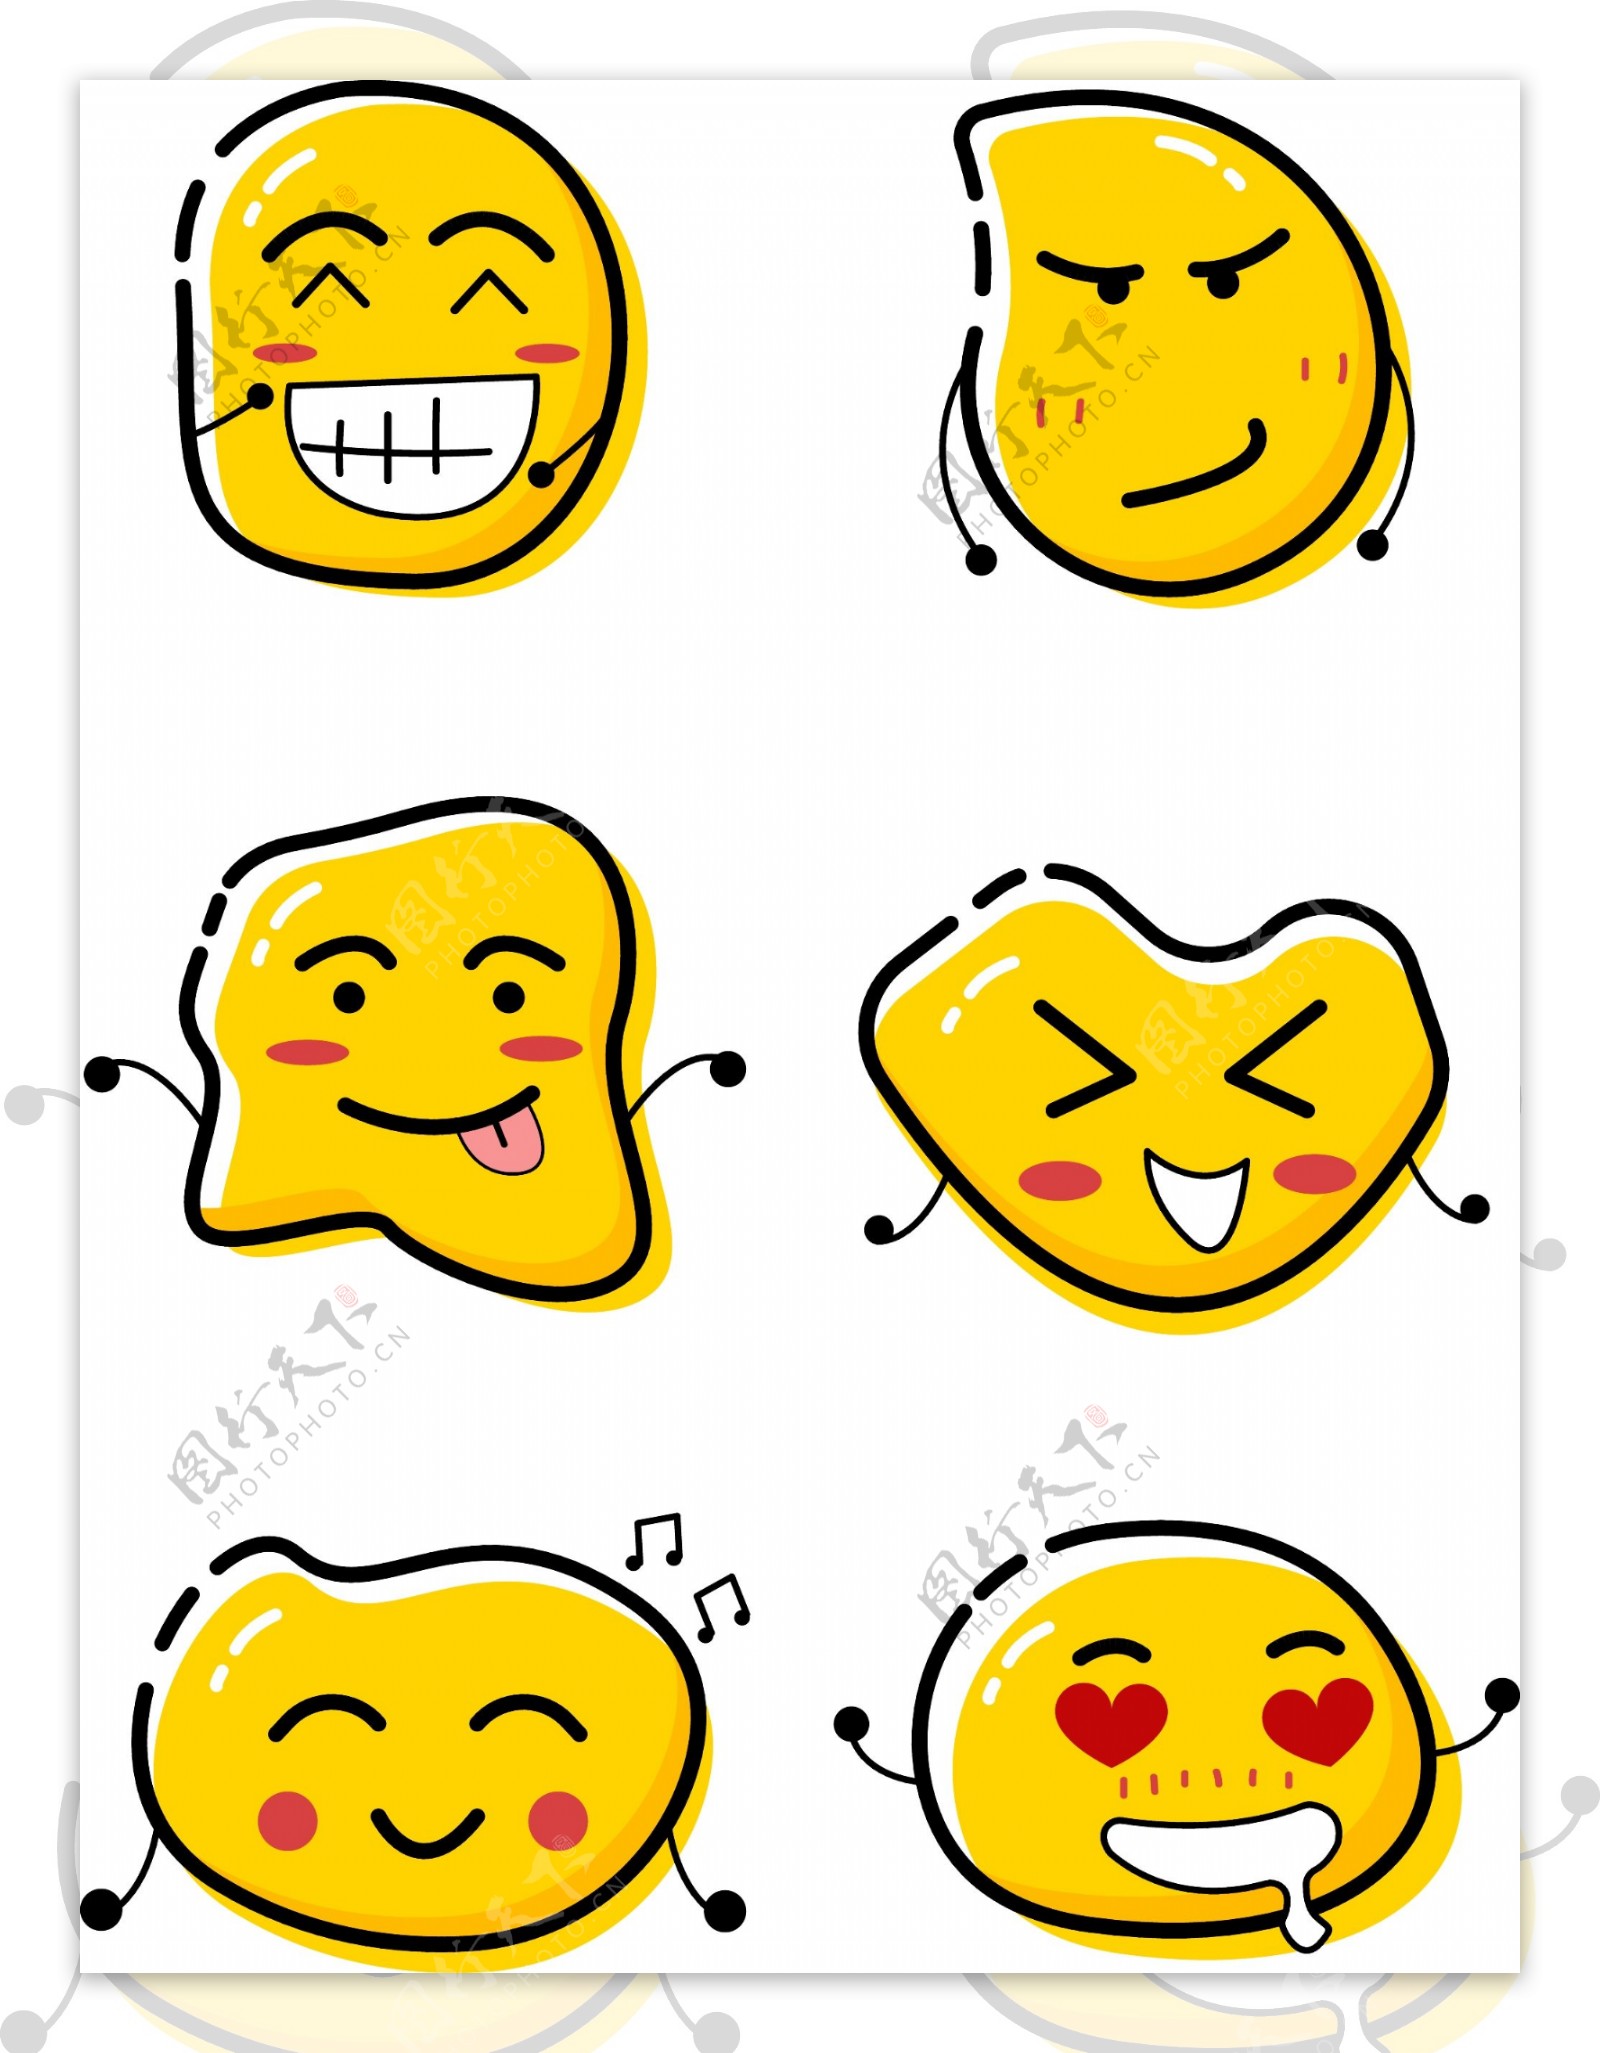 MBE风格emoji创意笑脸卡通矢量元素